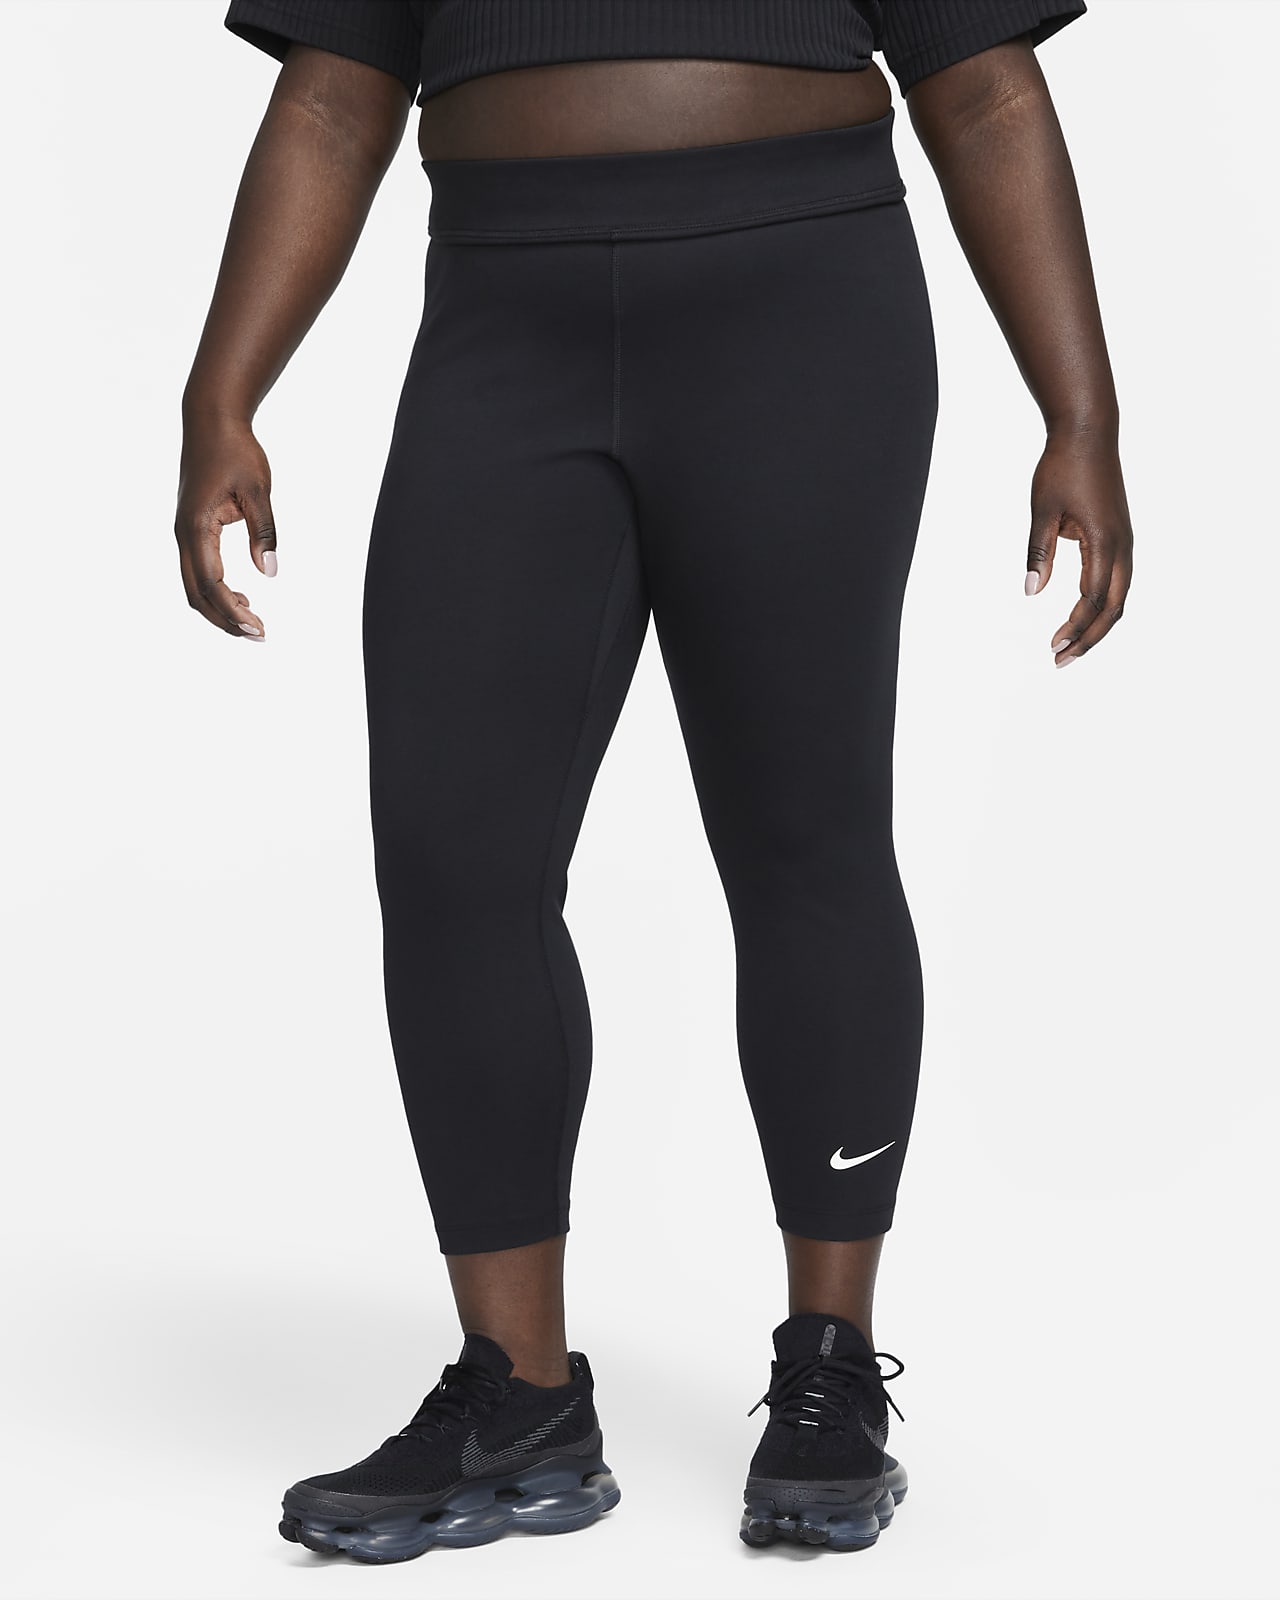 Legging 7/8 taille haute Nike Sportswear Classic pour femme (grande taille)